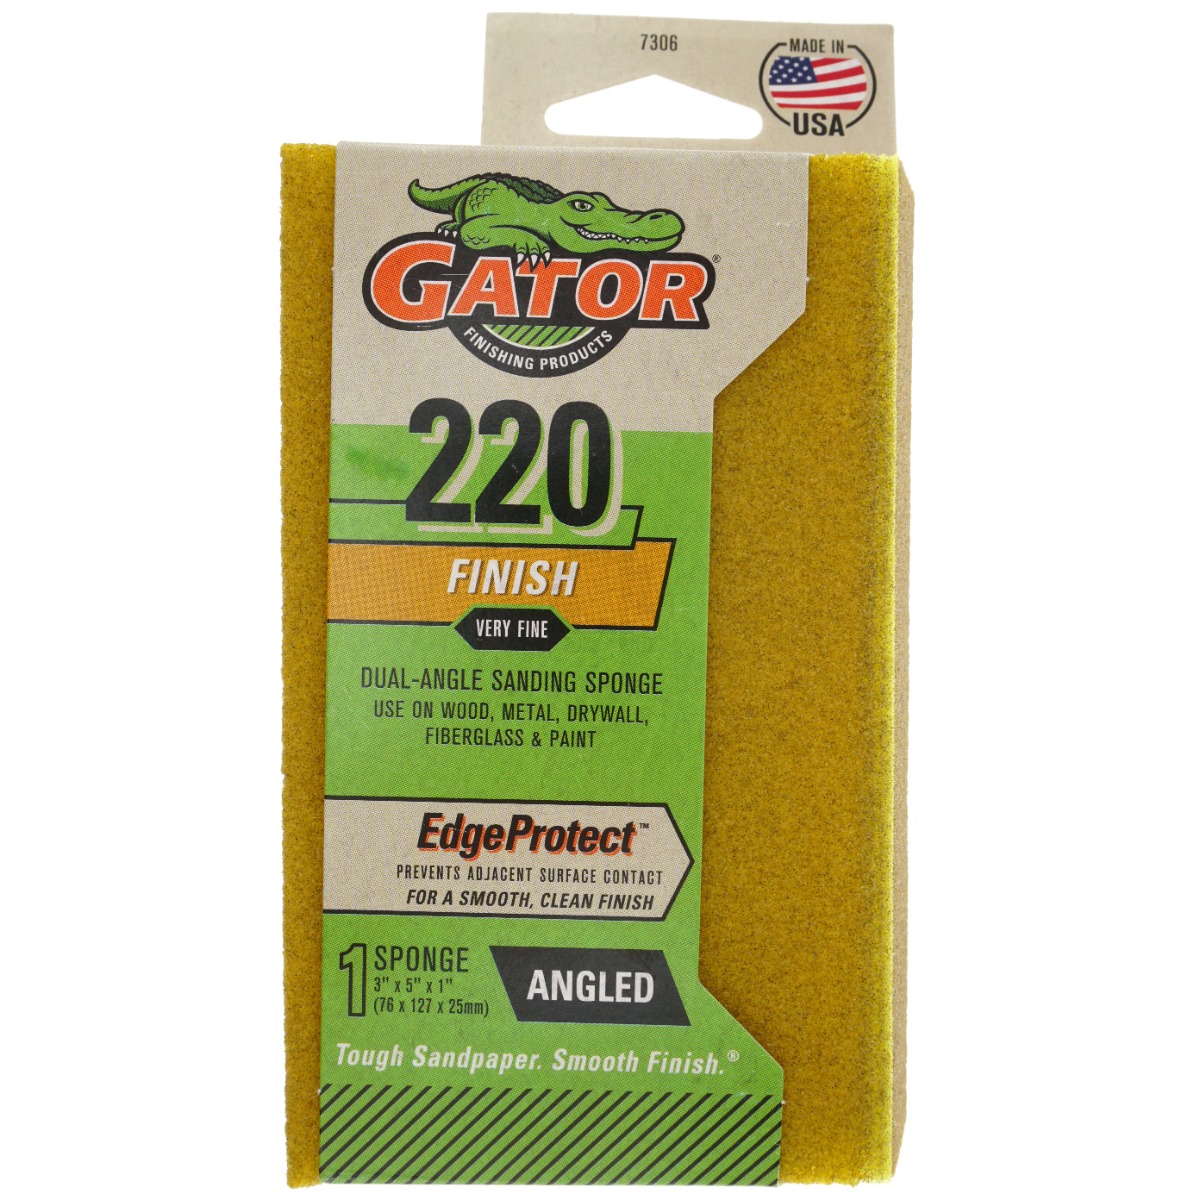 Gator 7306 Dual-Angled Sanding Sponge, 220 Grit Very Fine, 3 x 5 x 1"